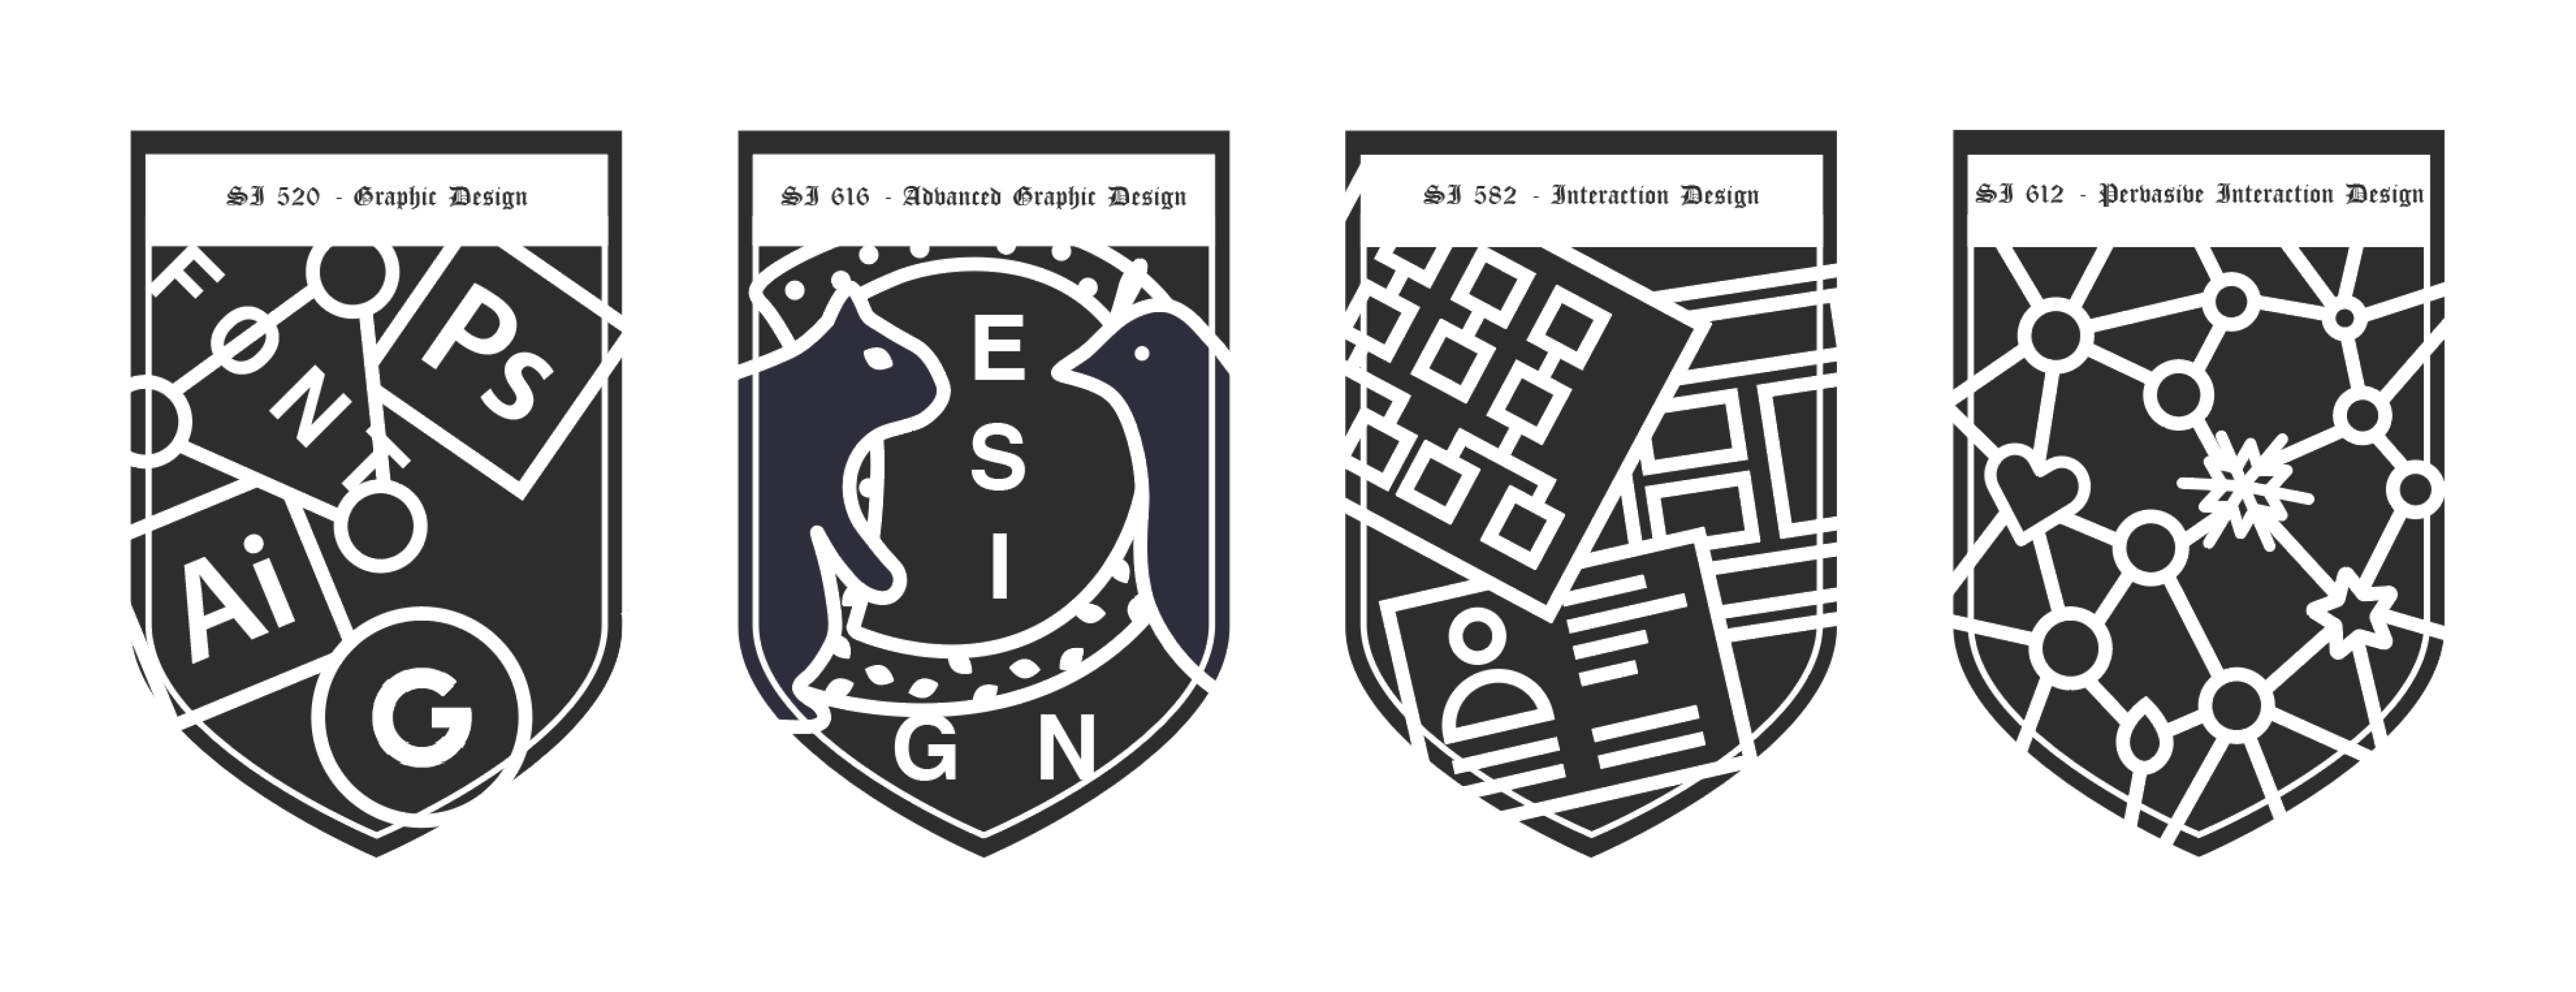 Badge Design for Design Courses